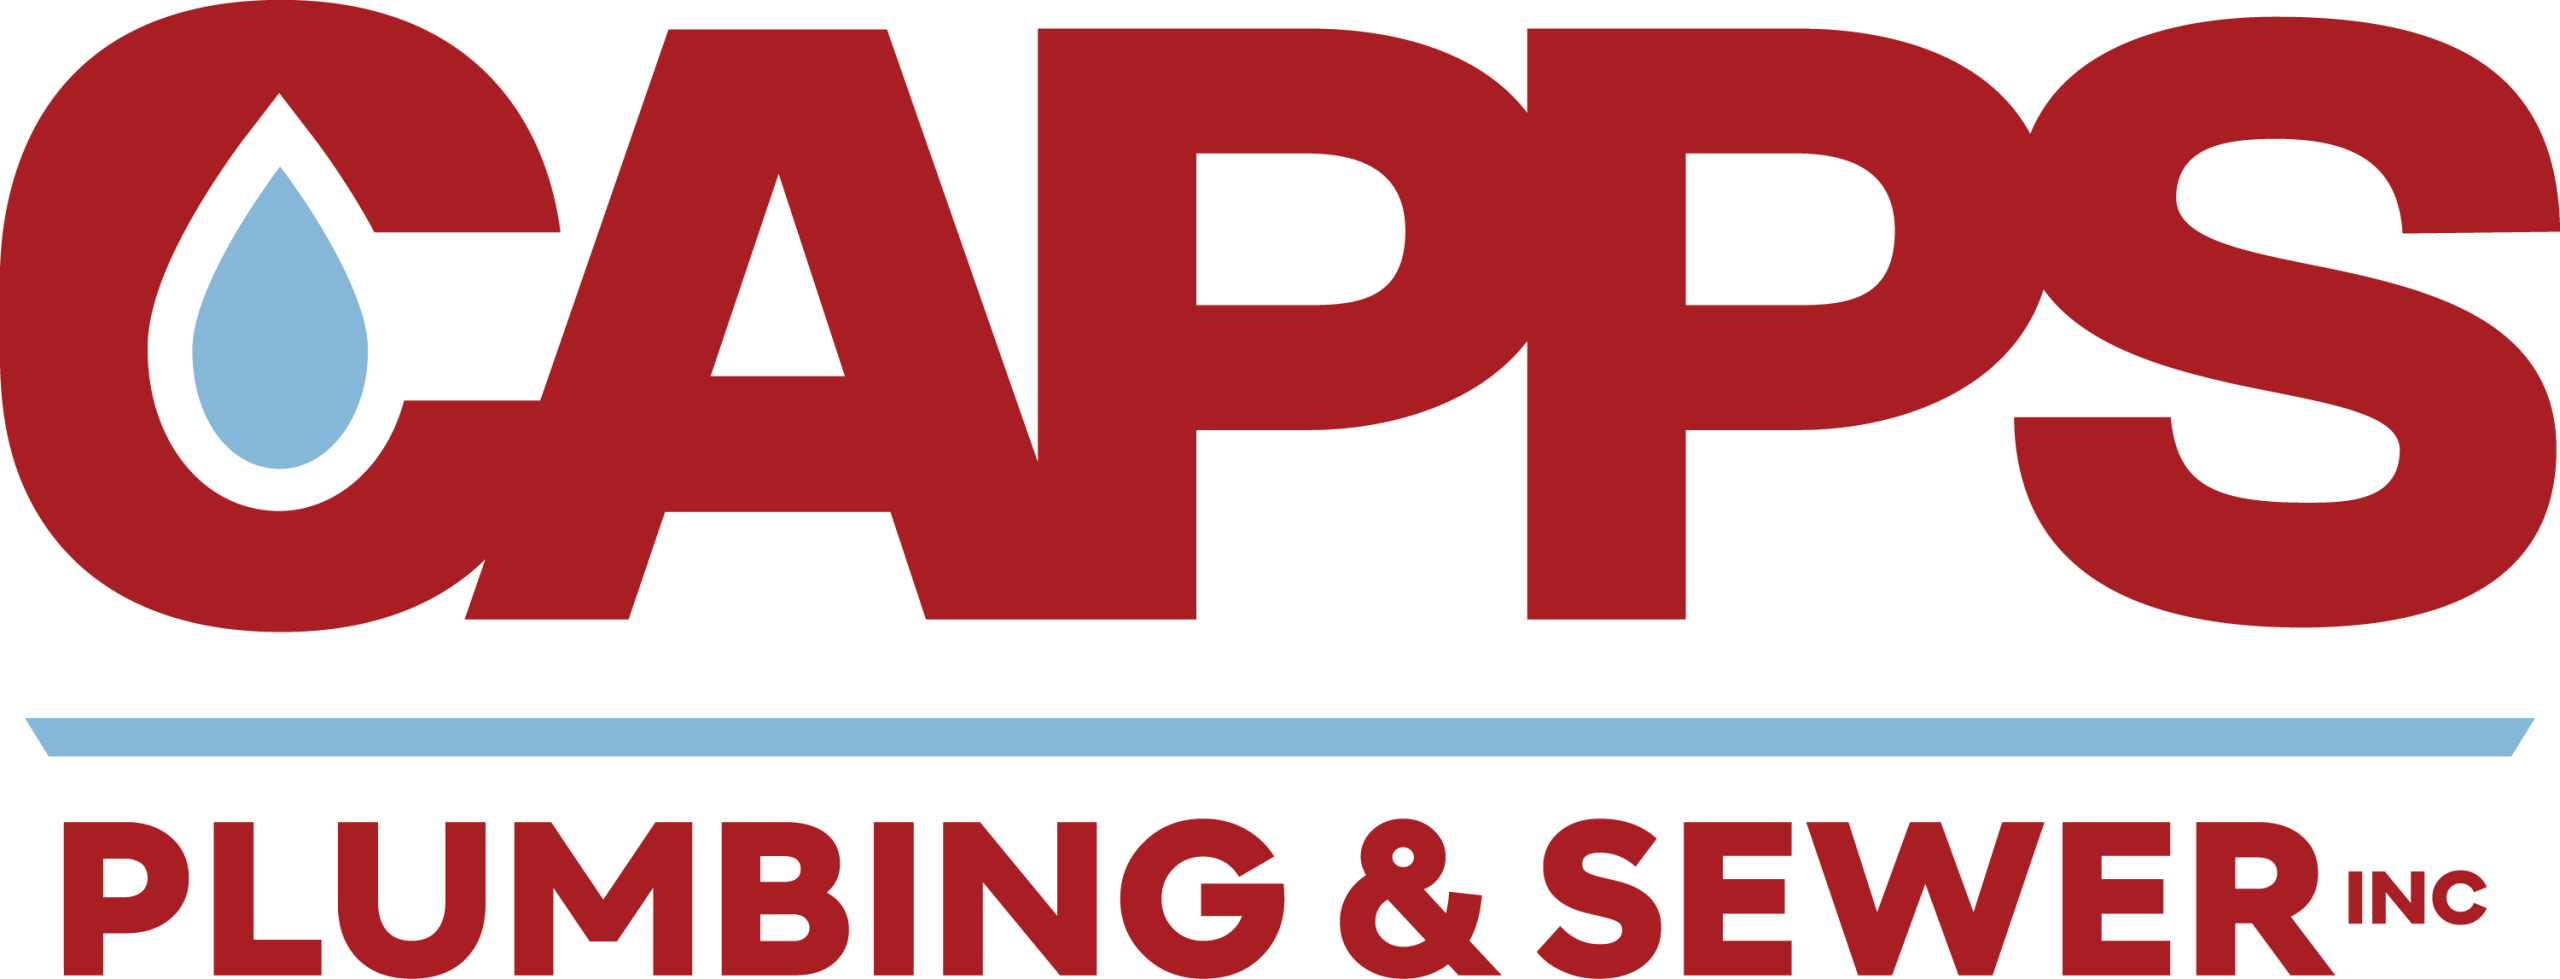 Capps Plumbing & Sewer logo